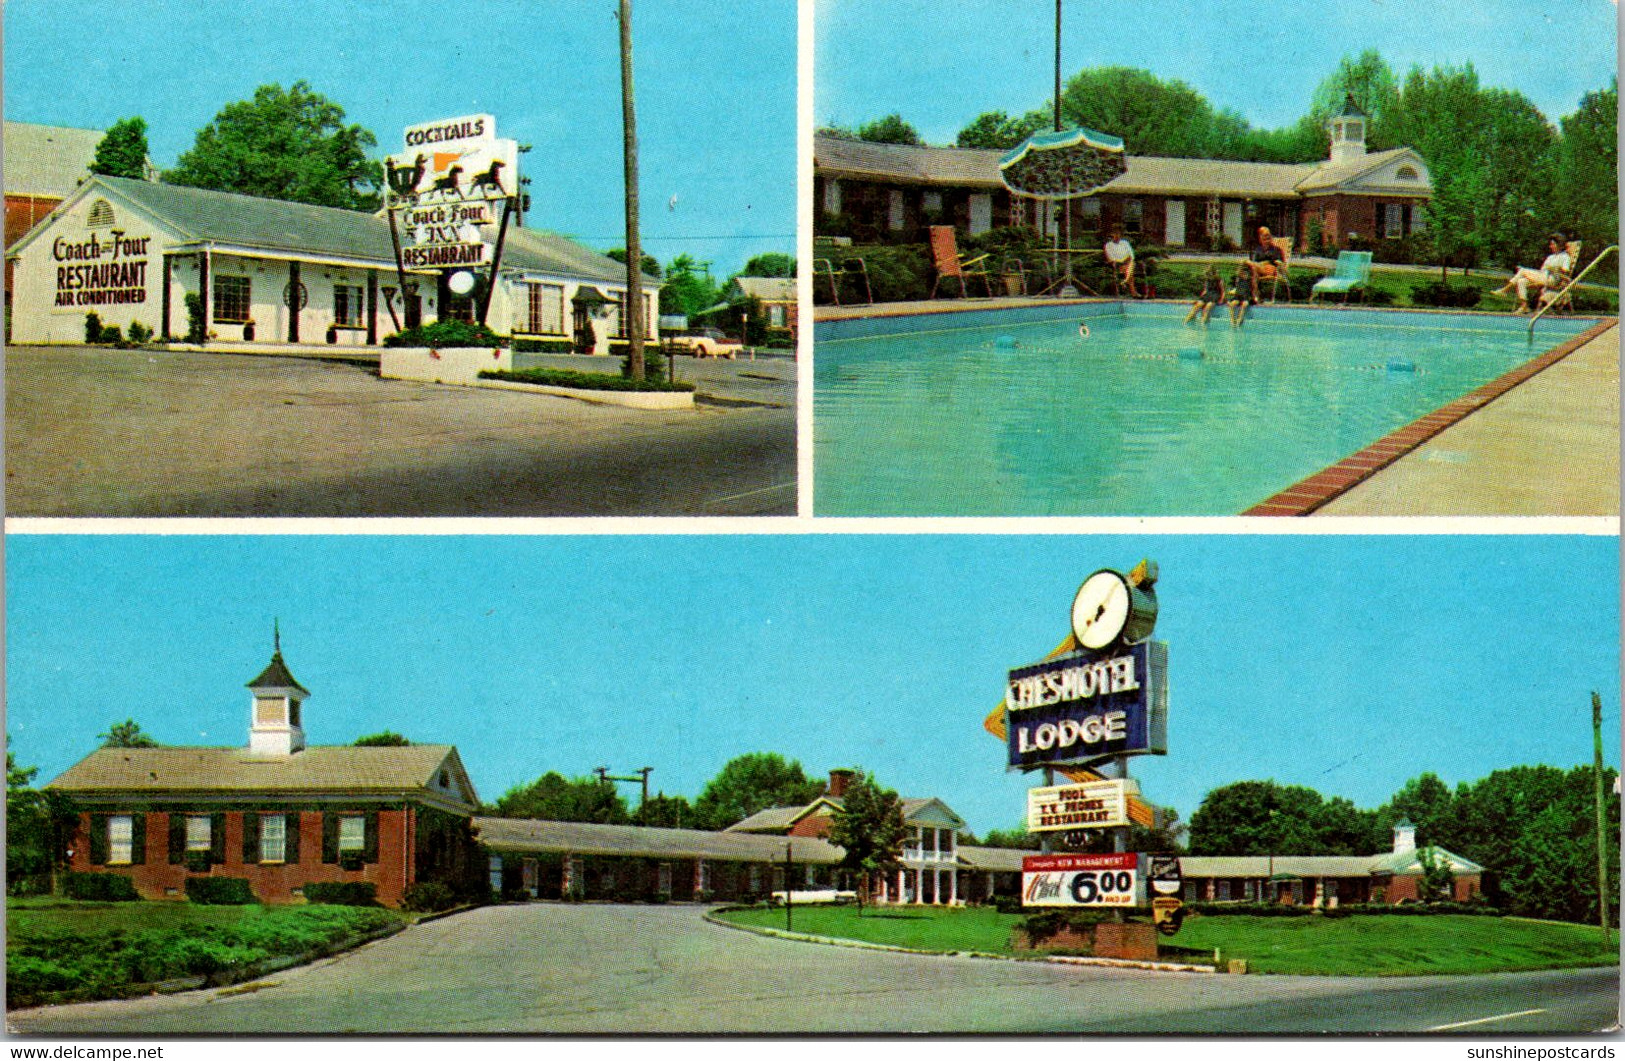 Kentucky Hopkinsville The Chesmotel Lodge - Hopkinsville